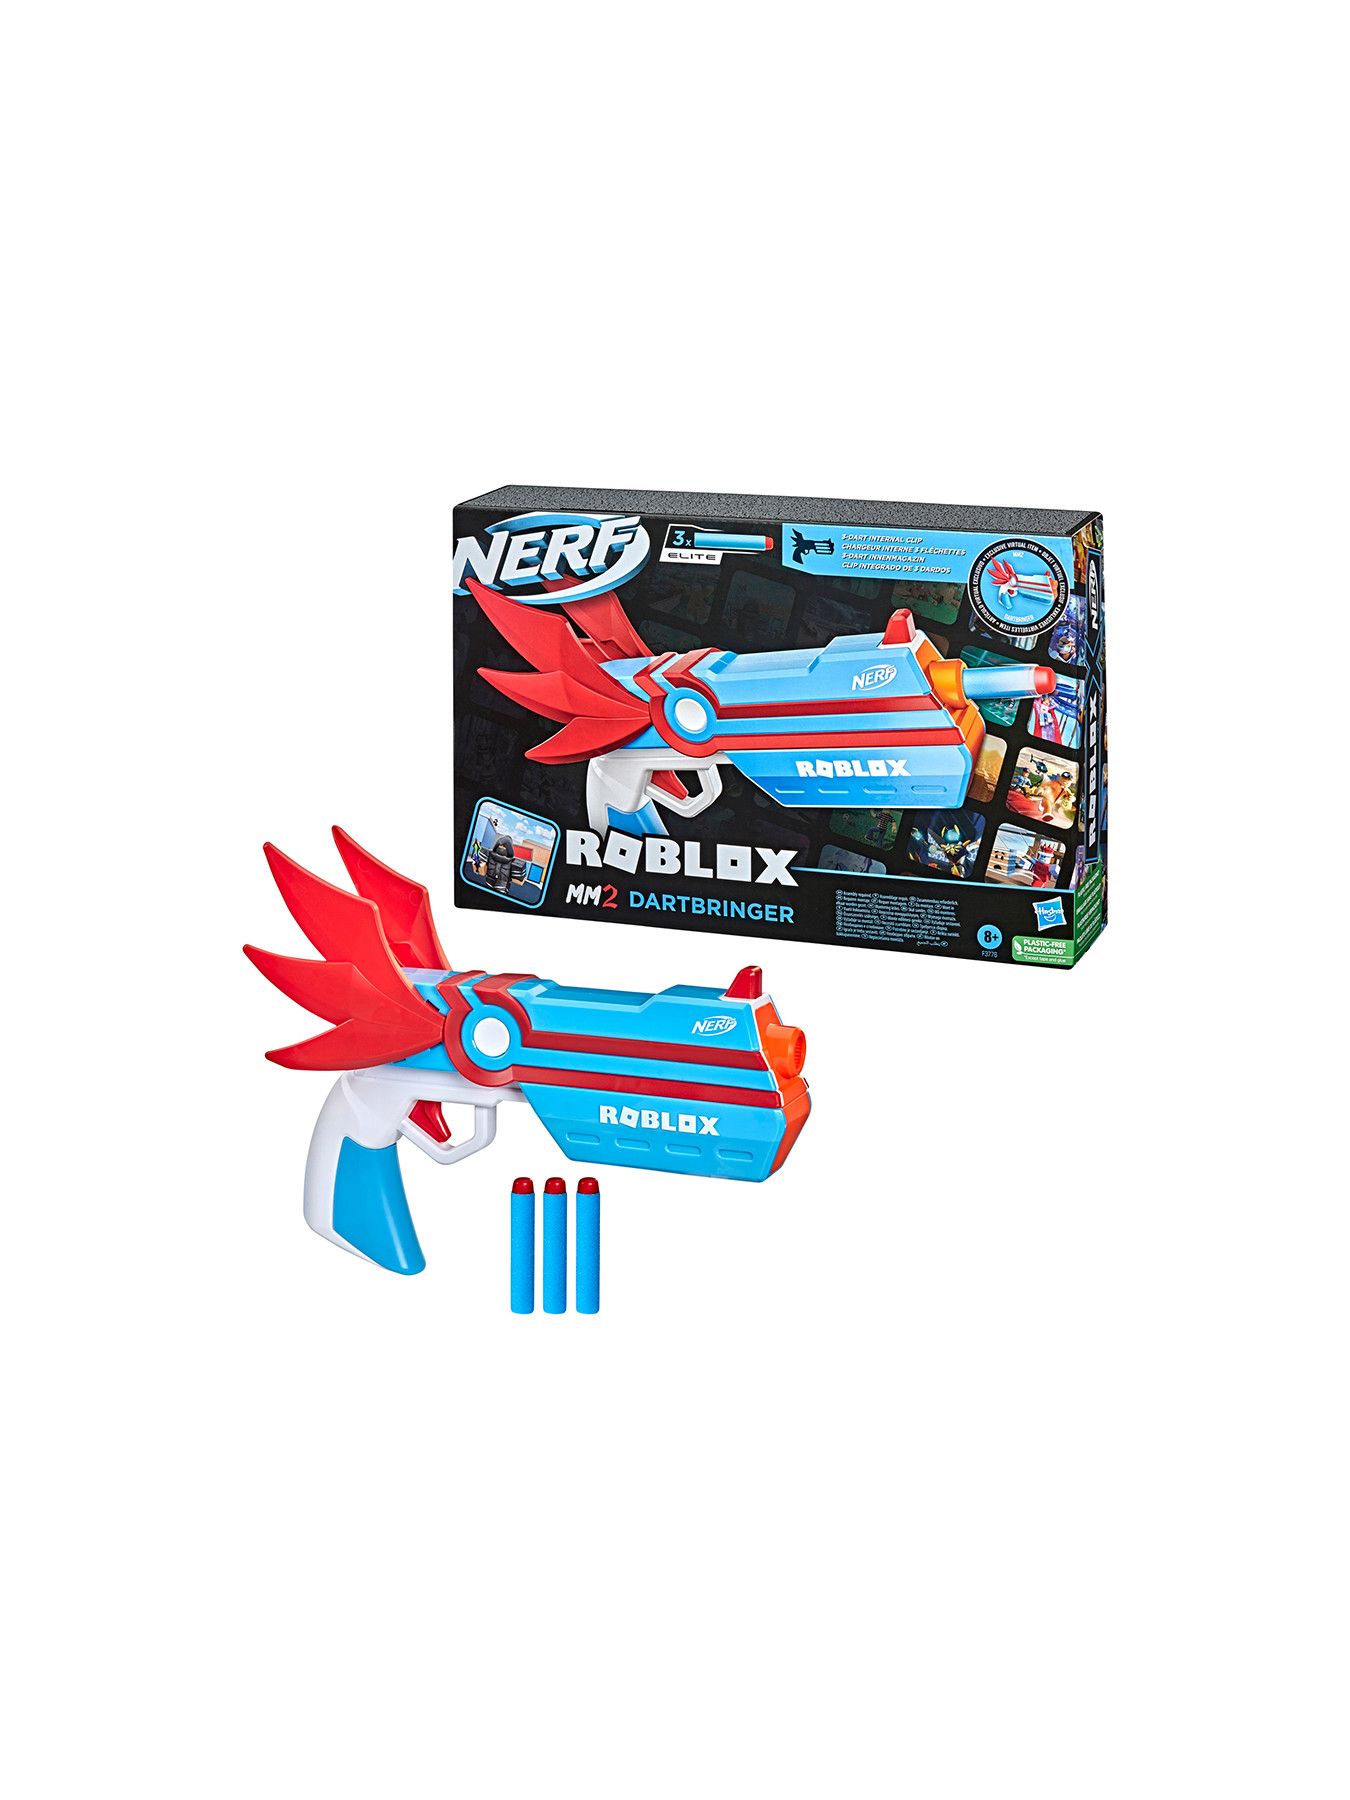 Nerf Roblox MM2: Dartbringer Dart Blaster, Includes Code to Unlock